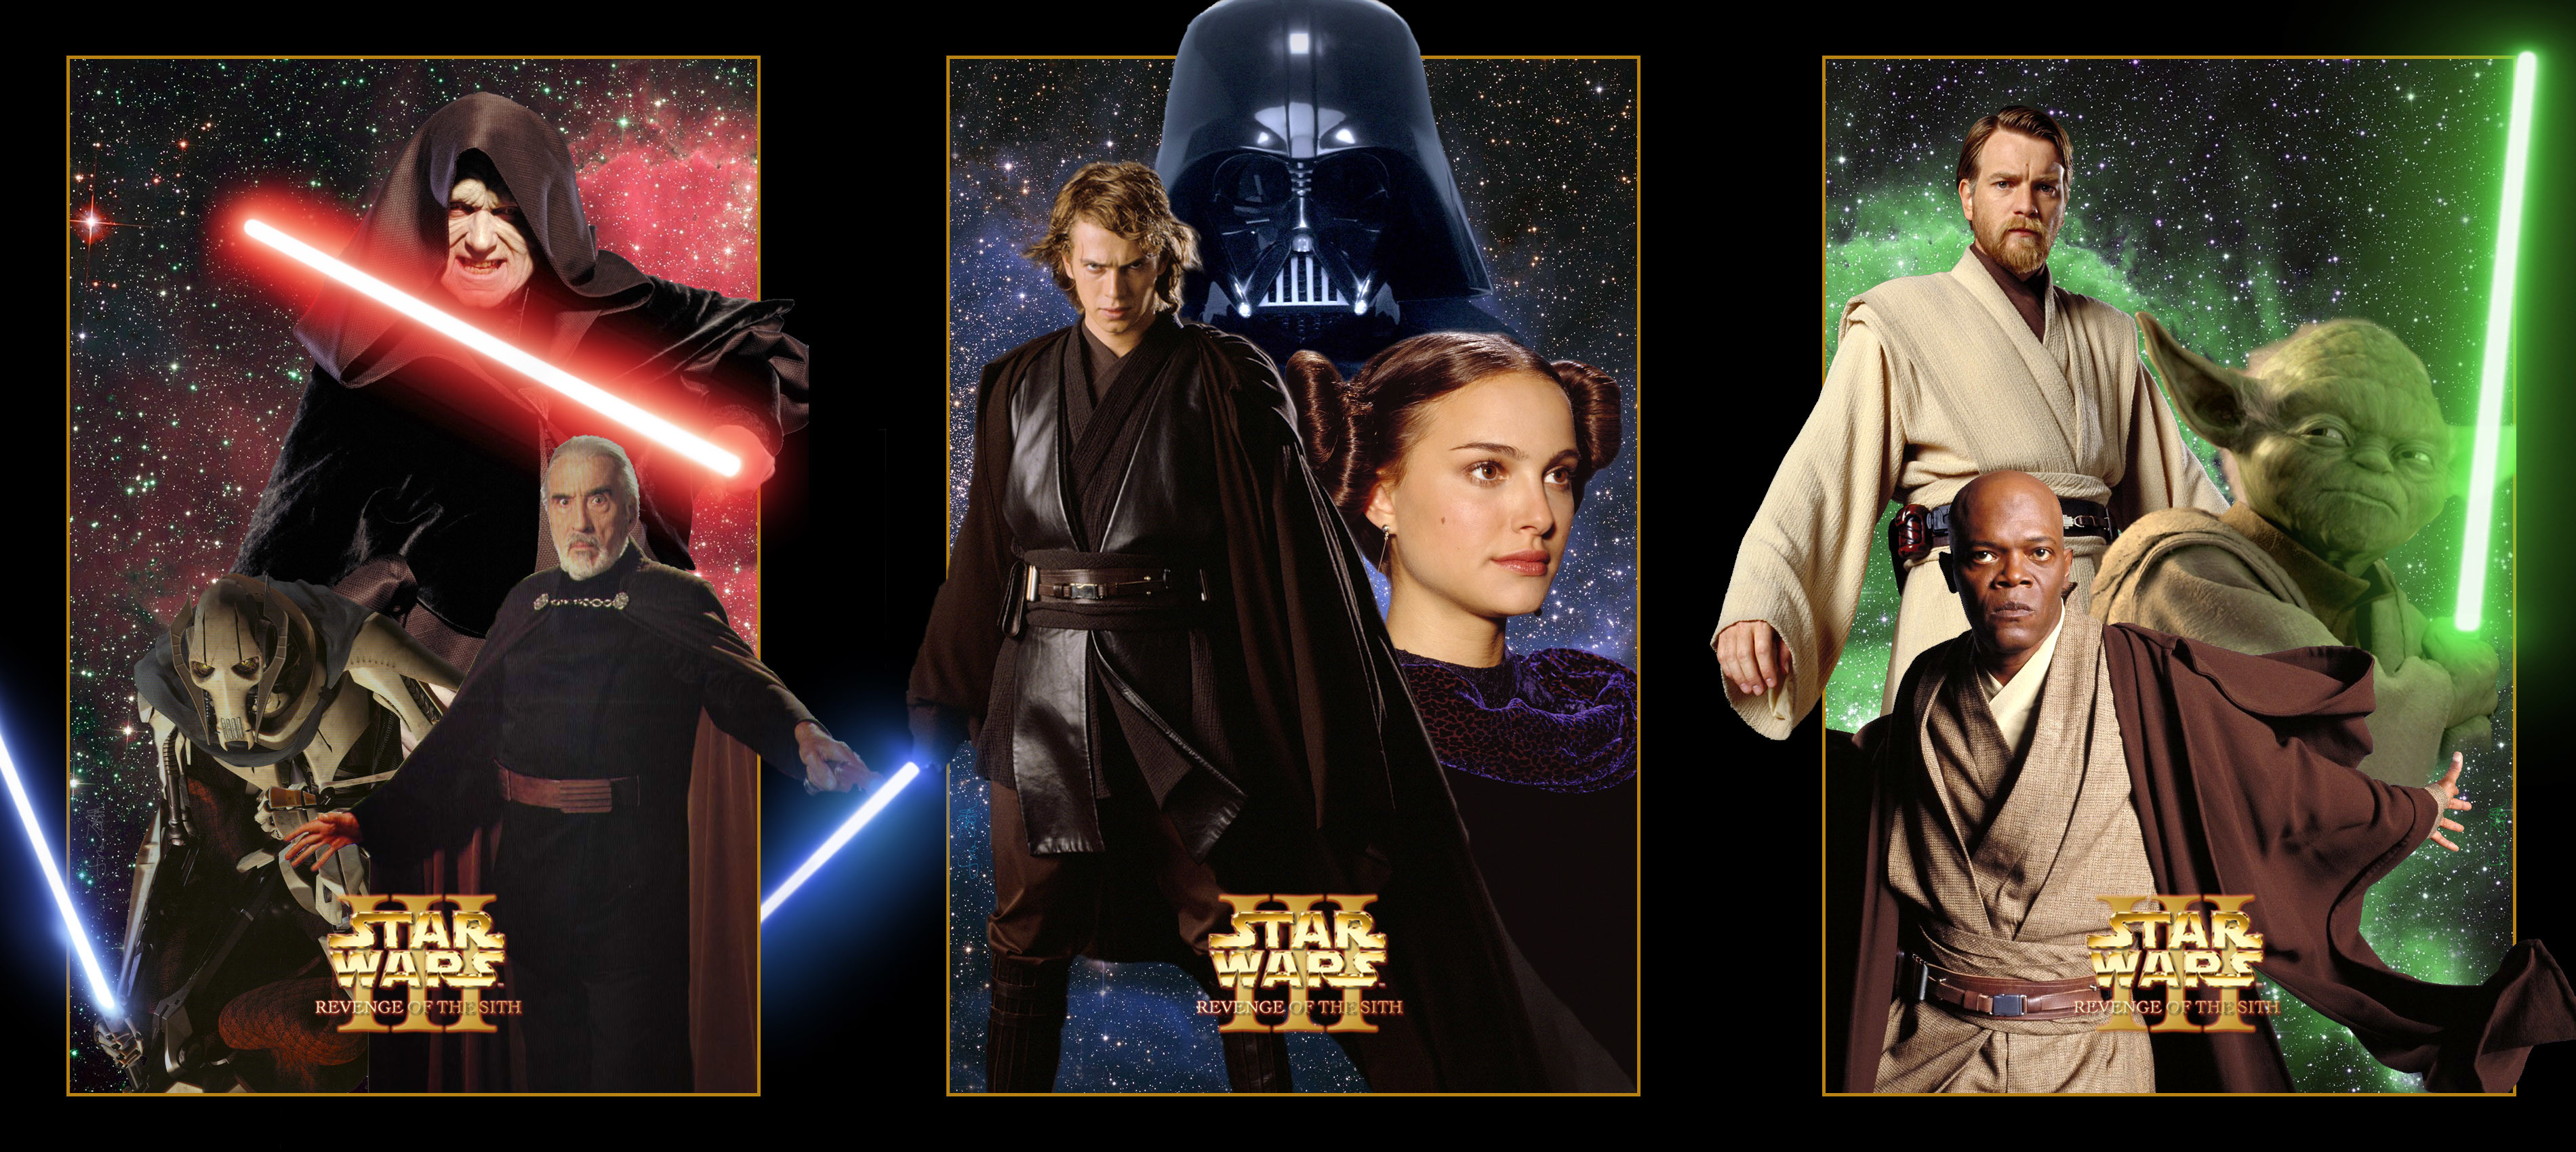 3800x1700 Star Wars, lightsabers, Darth Vader, Sith, Luke Skywalker, Padme Amidala -  Free Wallpaper / WallpaperJam.com